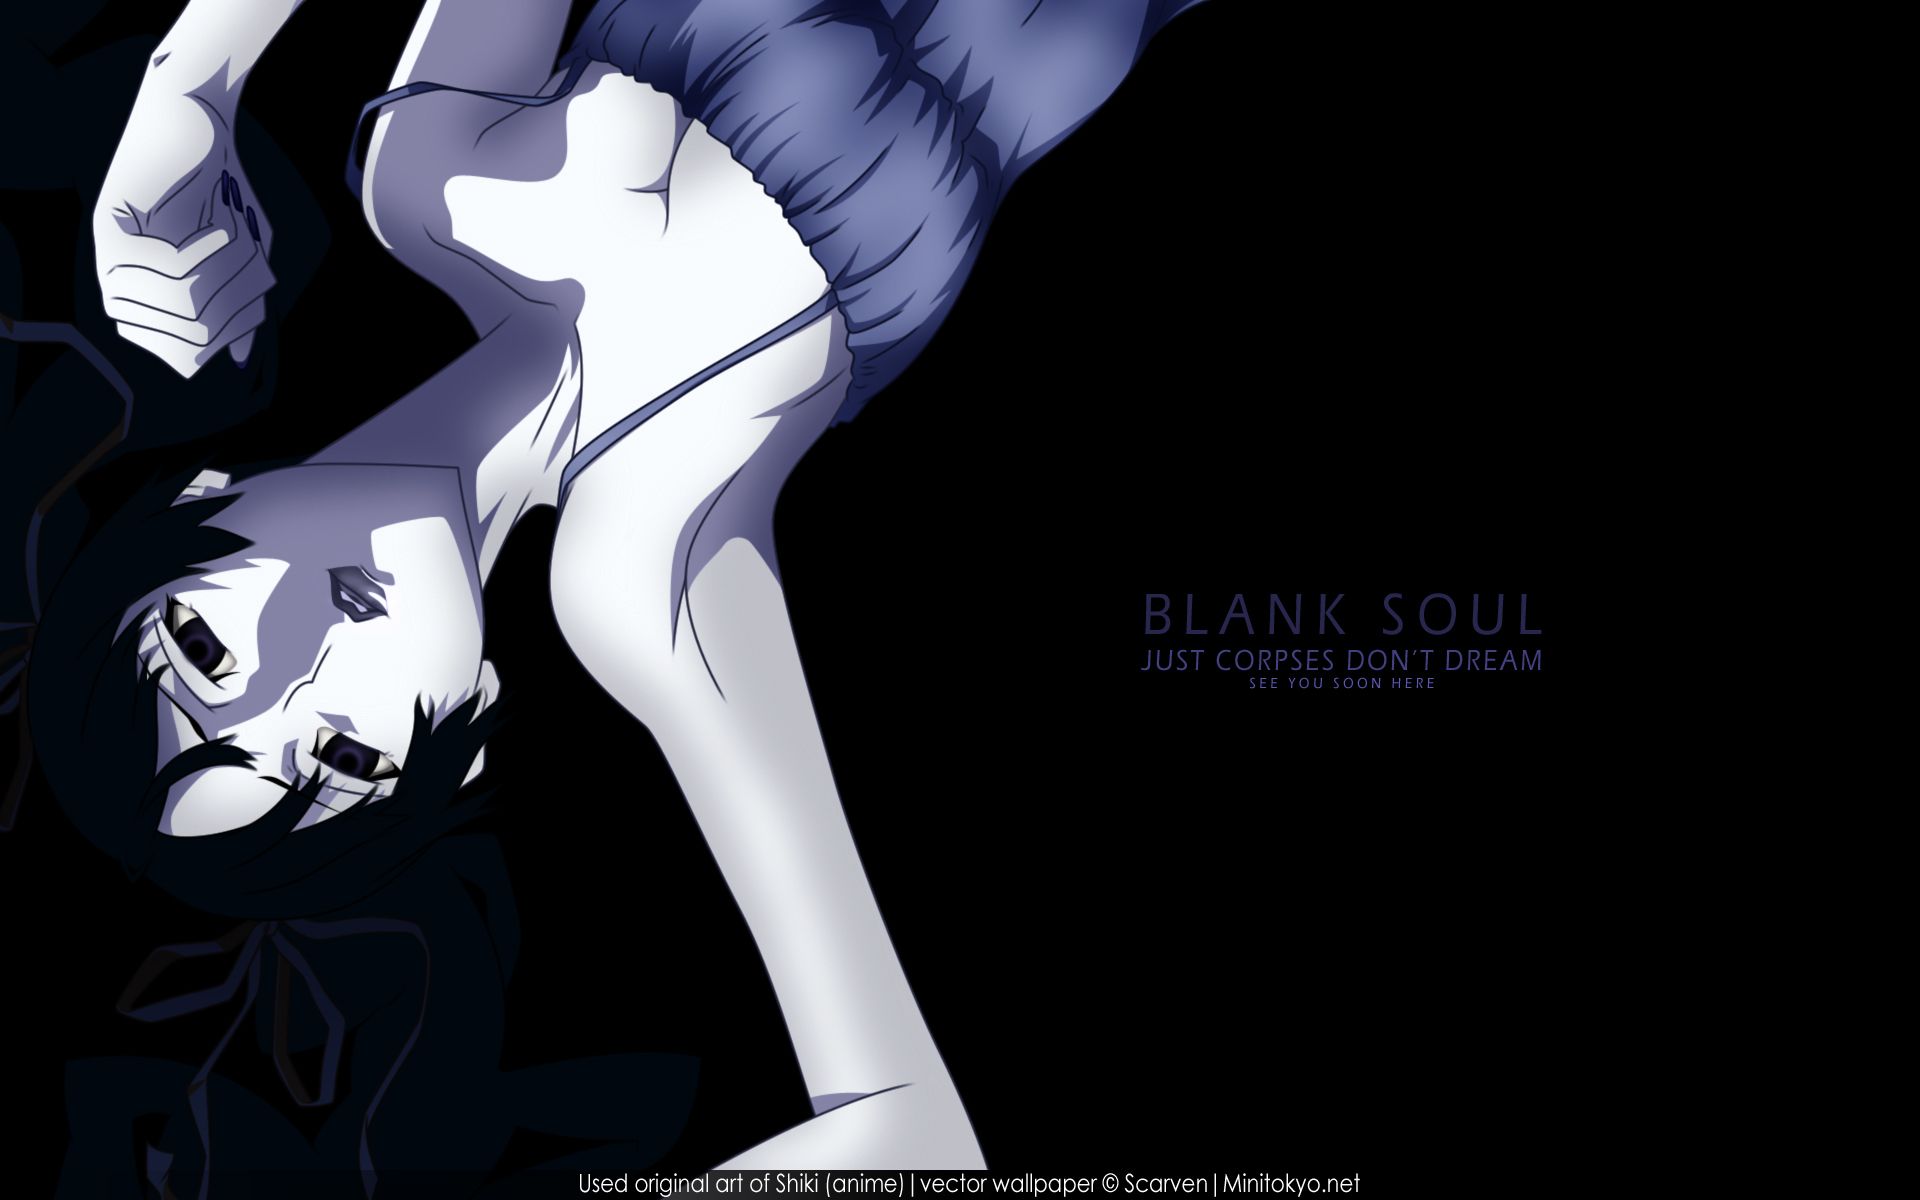 Blank soul - Shiki Wallpaper (15441228) - Fanpop